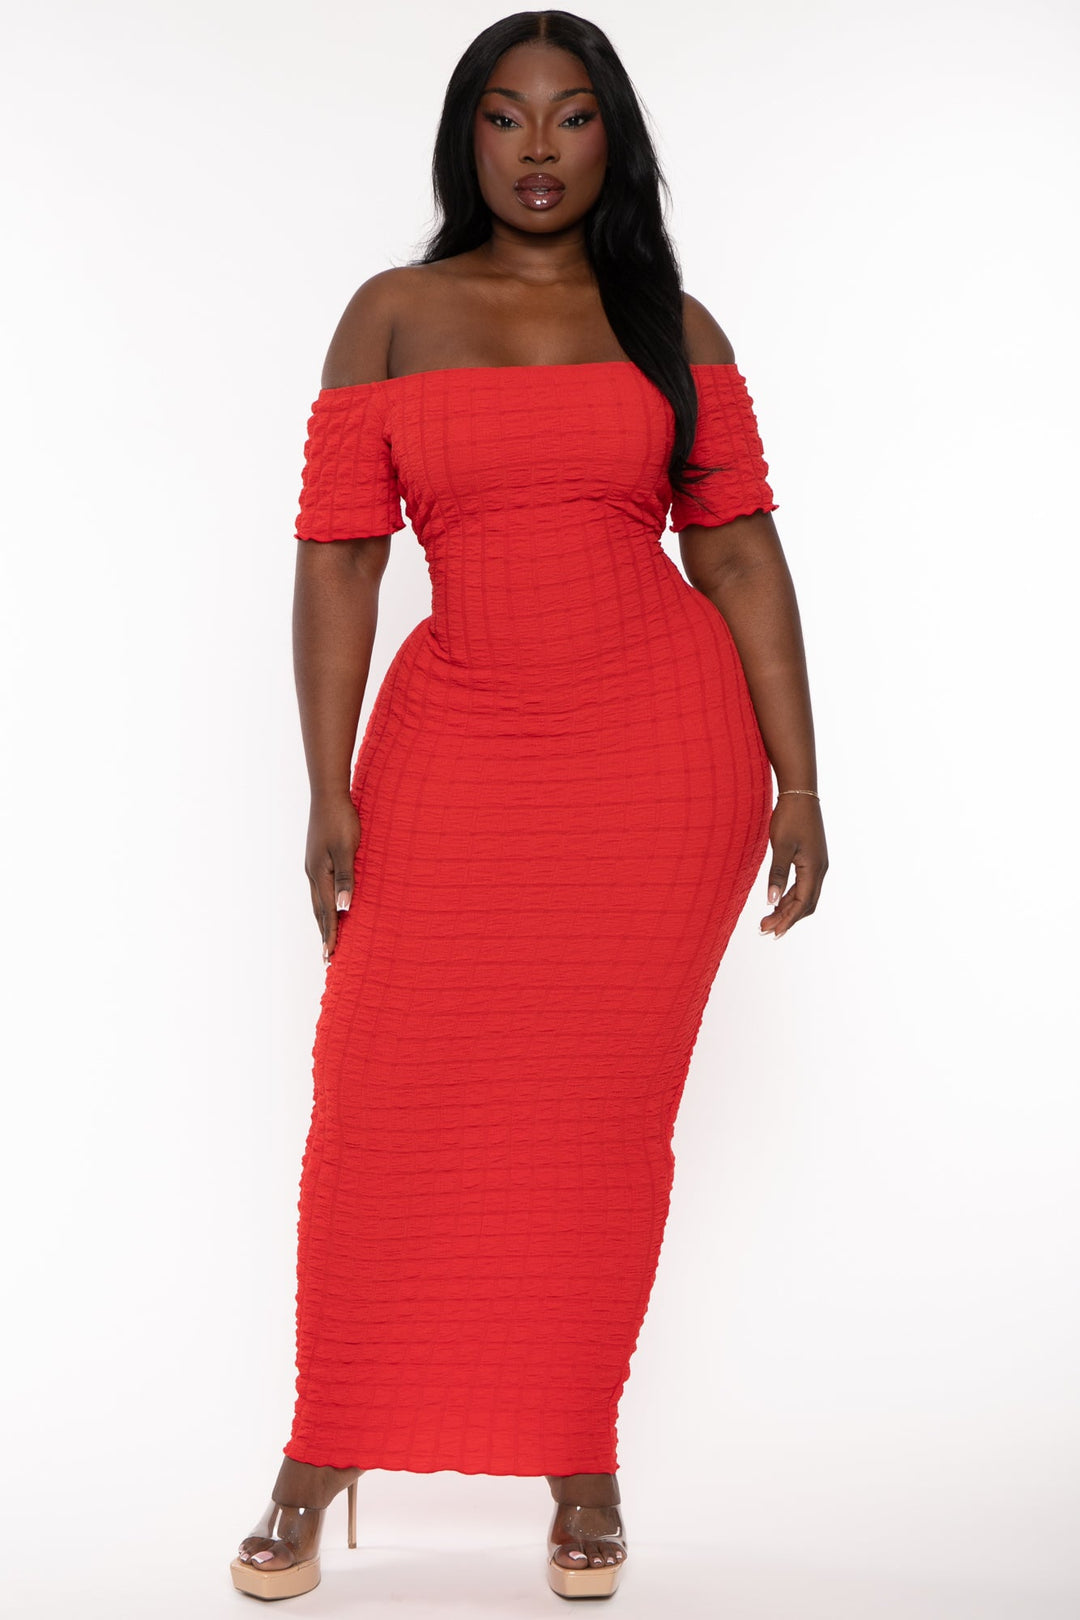 Curvy Sense Dresses 1X / Red Plus Size Arlissa Tube Maxi Dress - Red